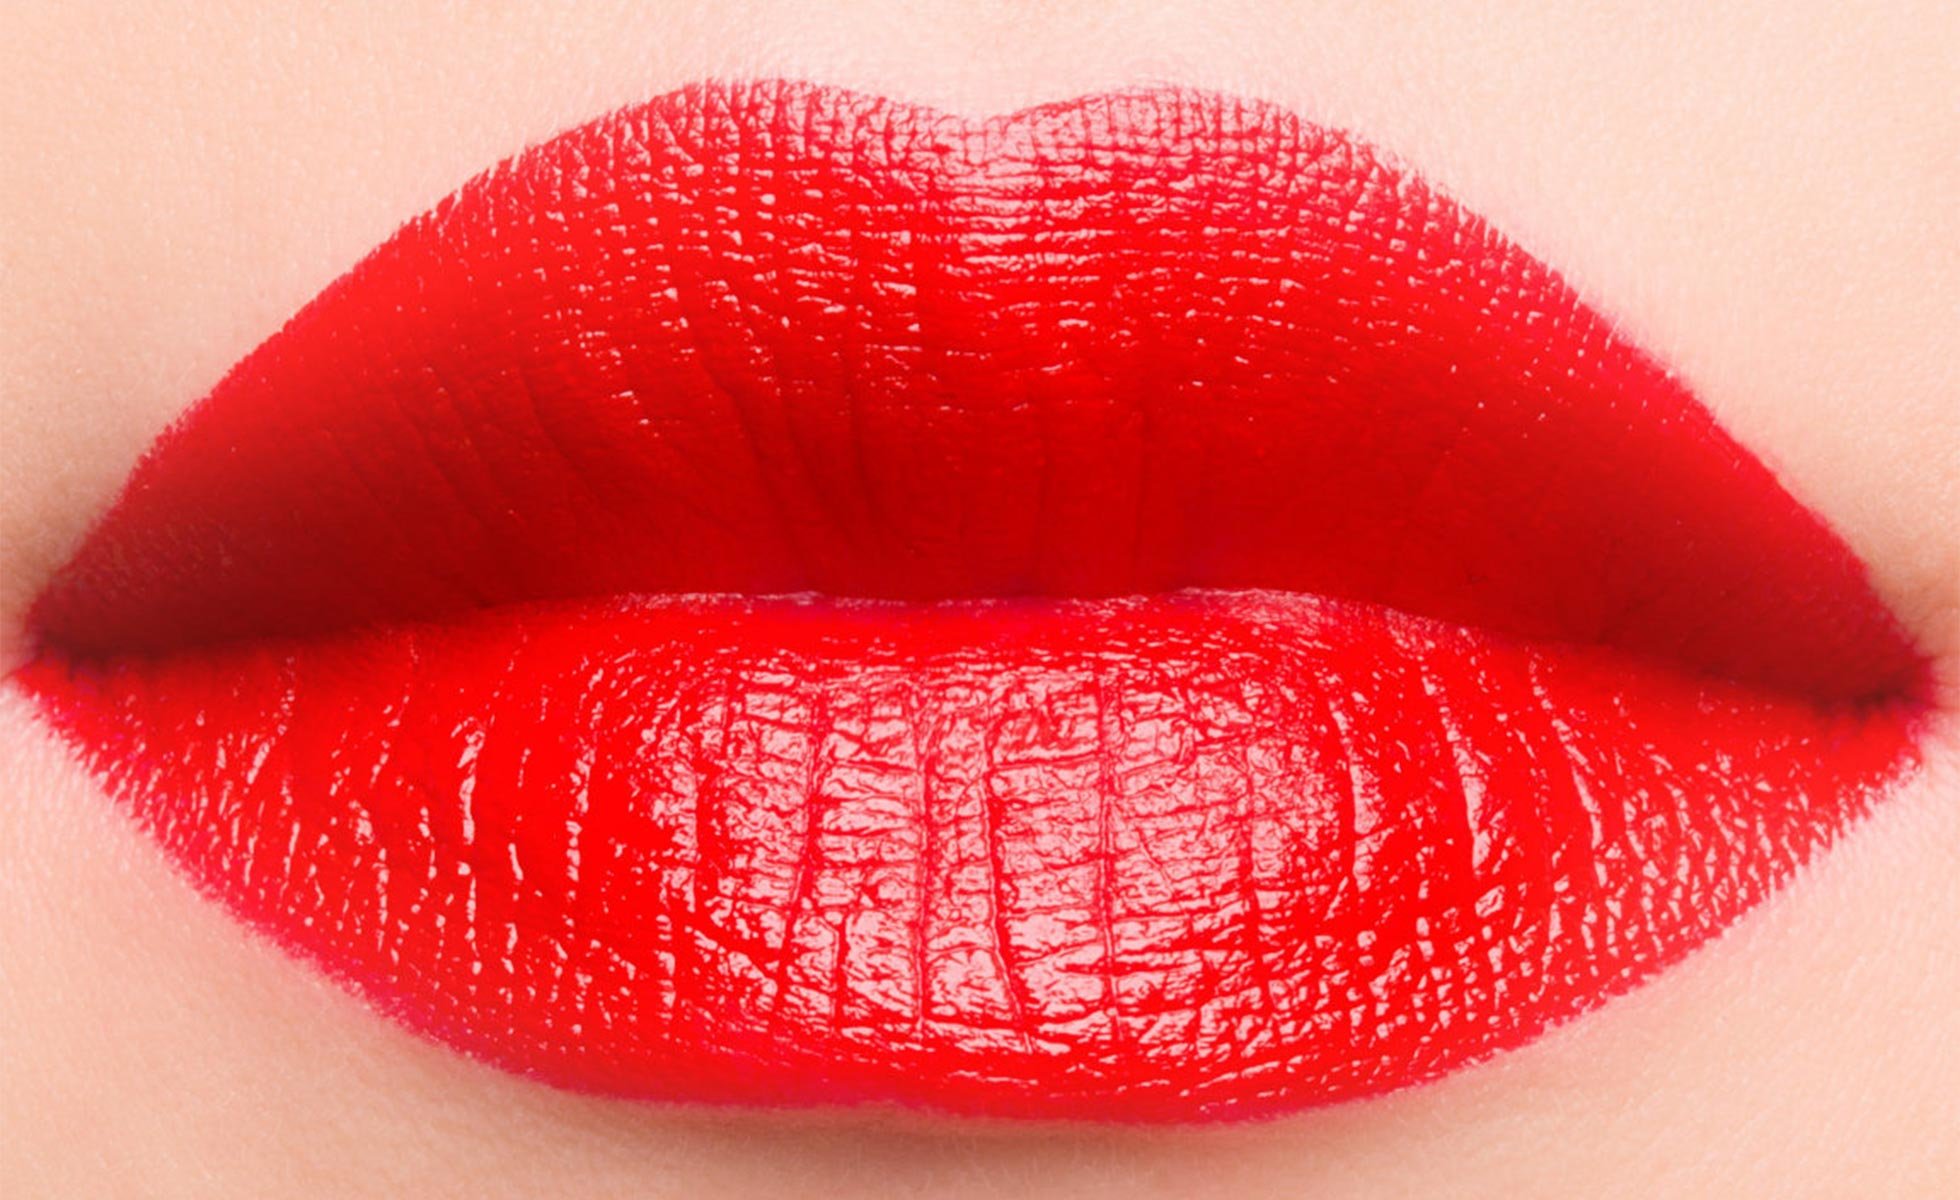 red lip makeup